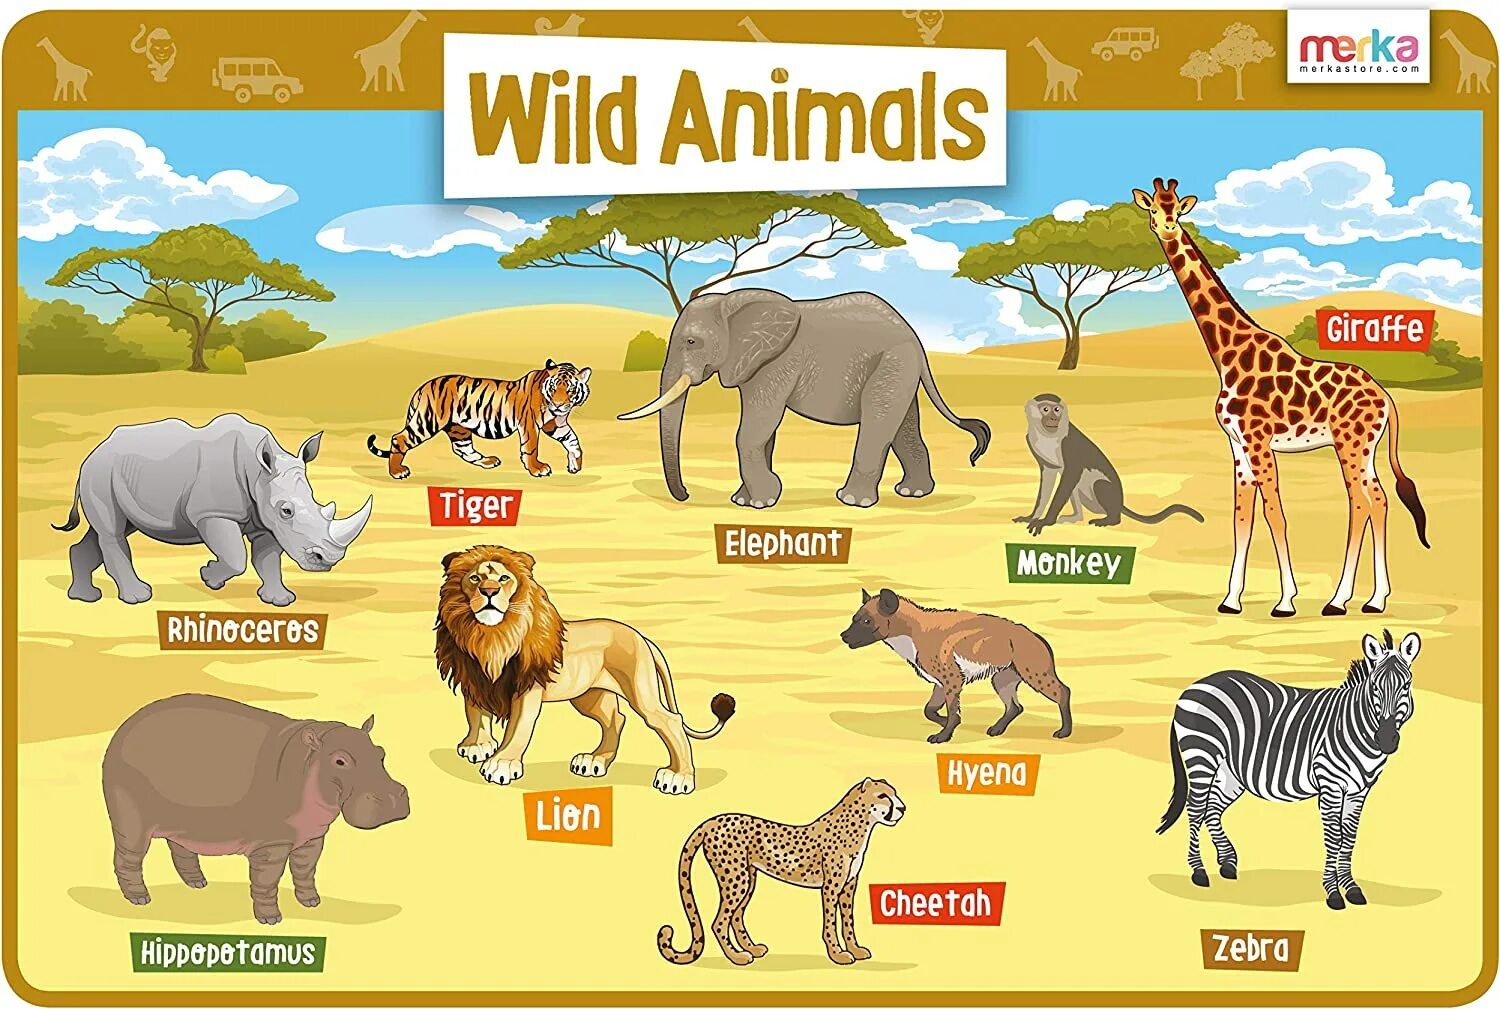 Wild animals essay. Wild animals для детей. Wild animals название. Животные Африки на английском. Wild animals на английском.